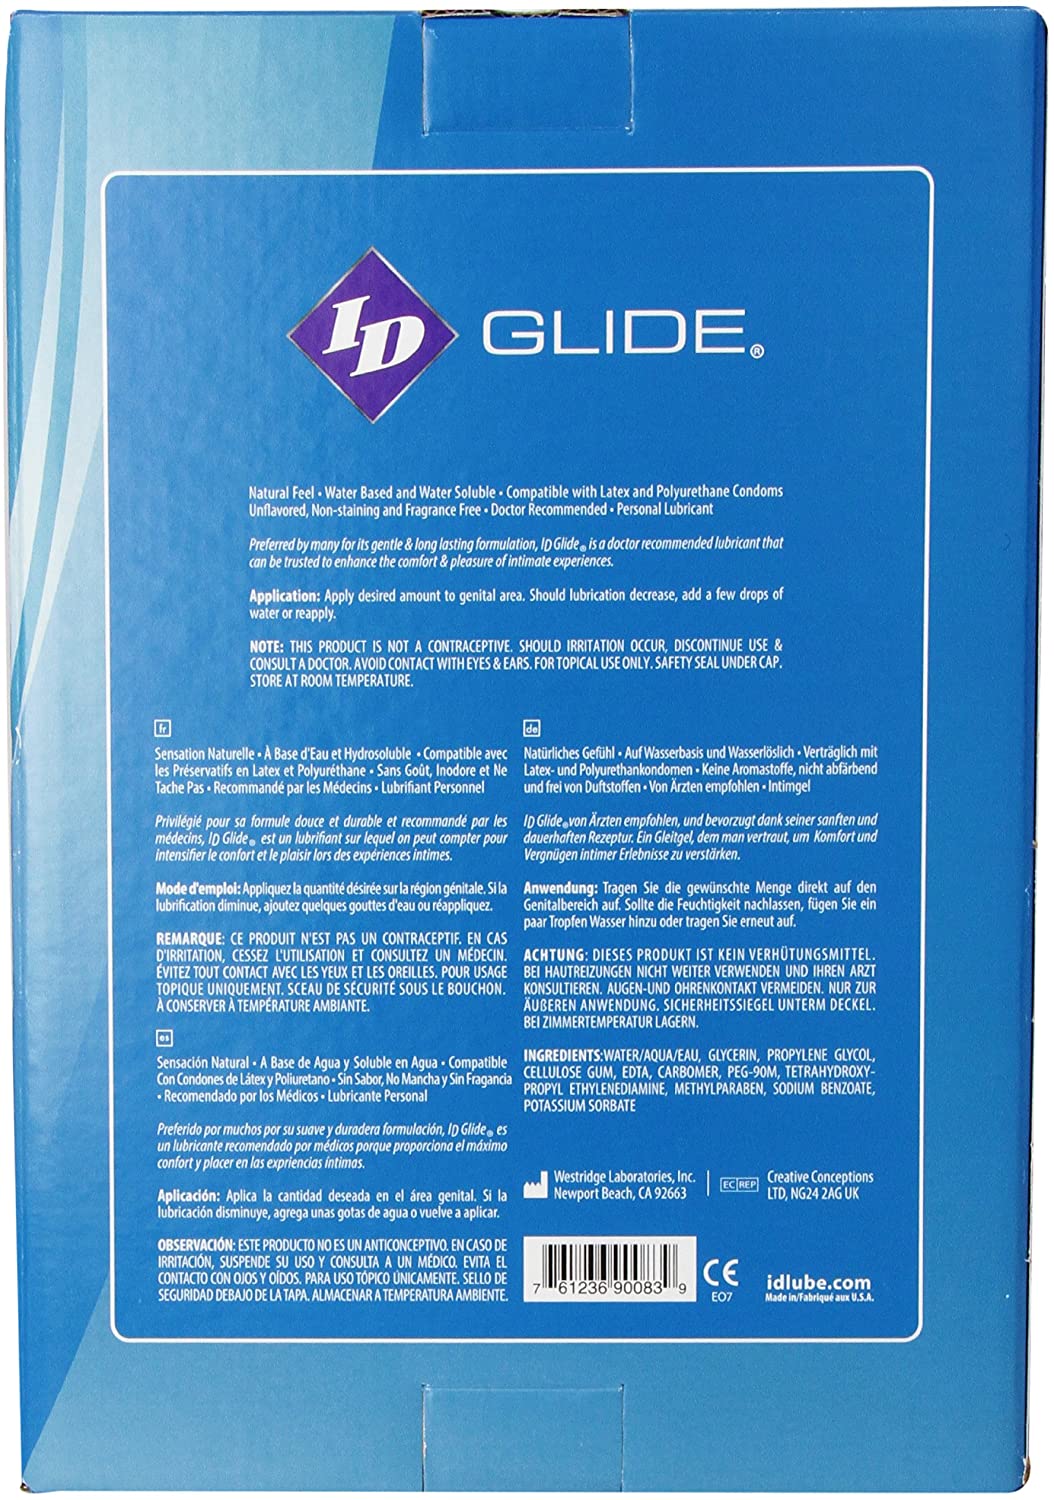 Id Glide 64 Fl Oz Natural Feel Water Based Personal Lubricant Ebay 8321